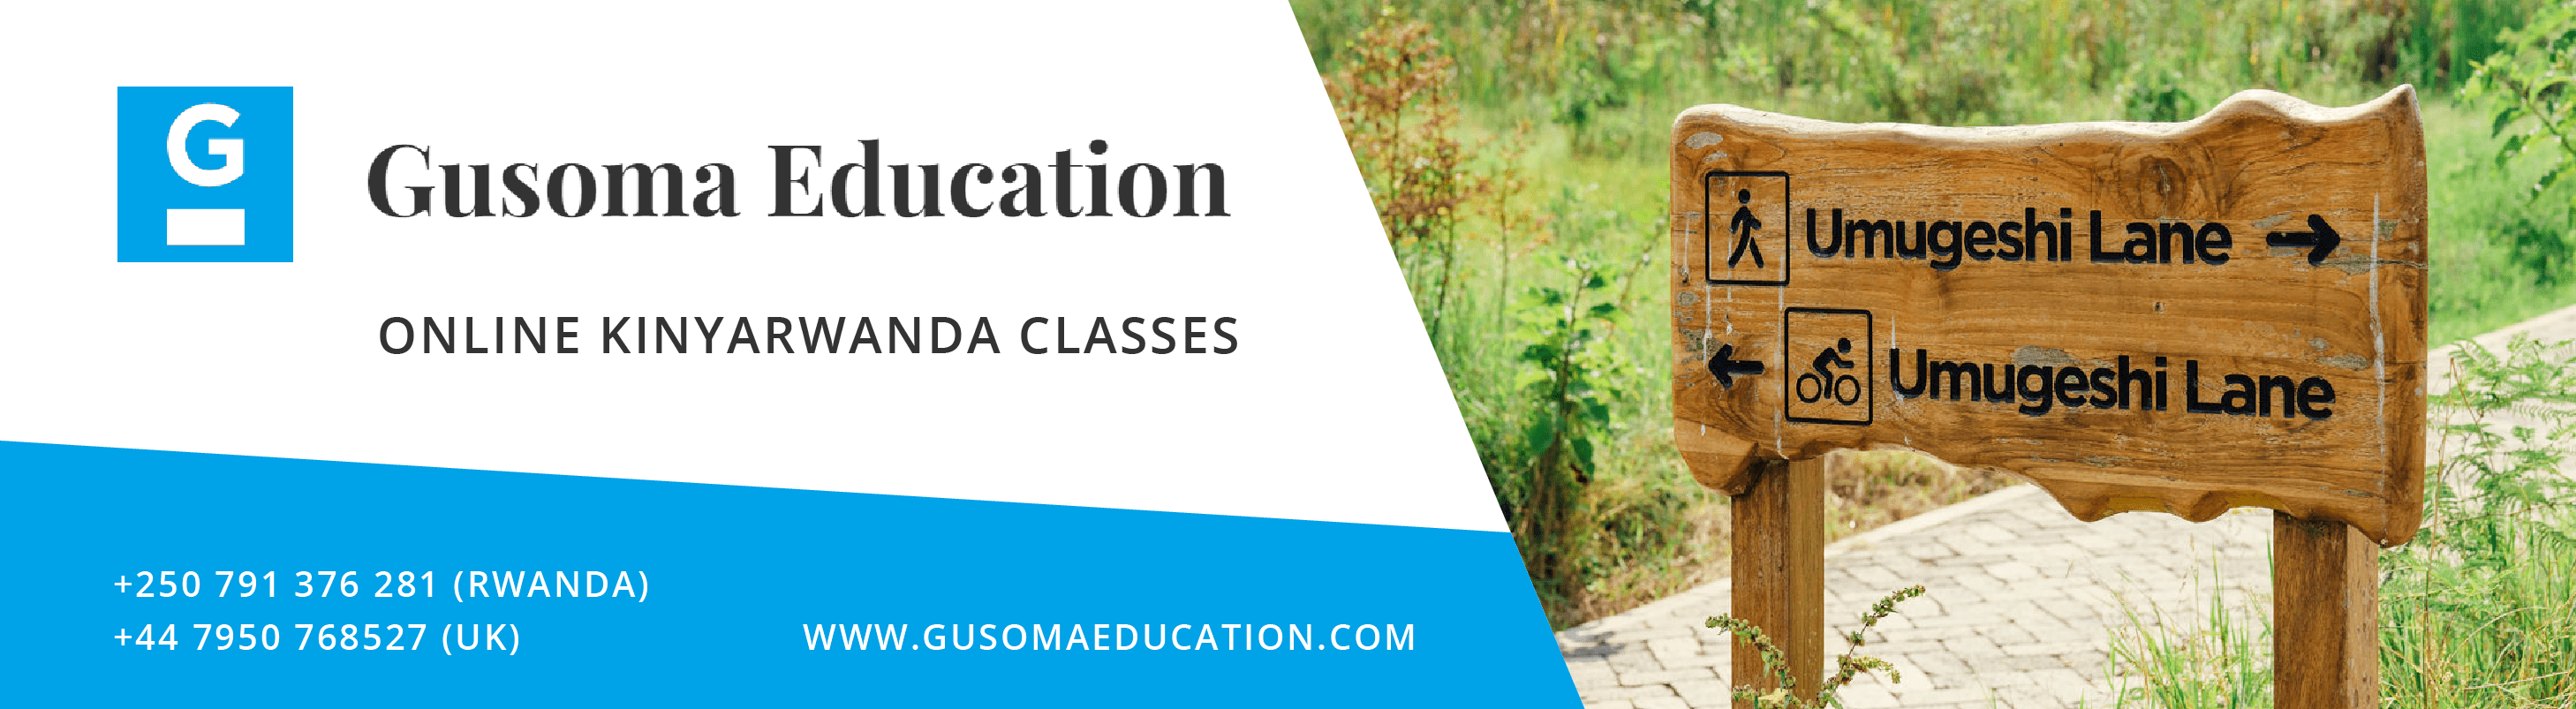 Gusoma Education